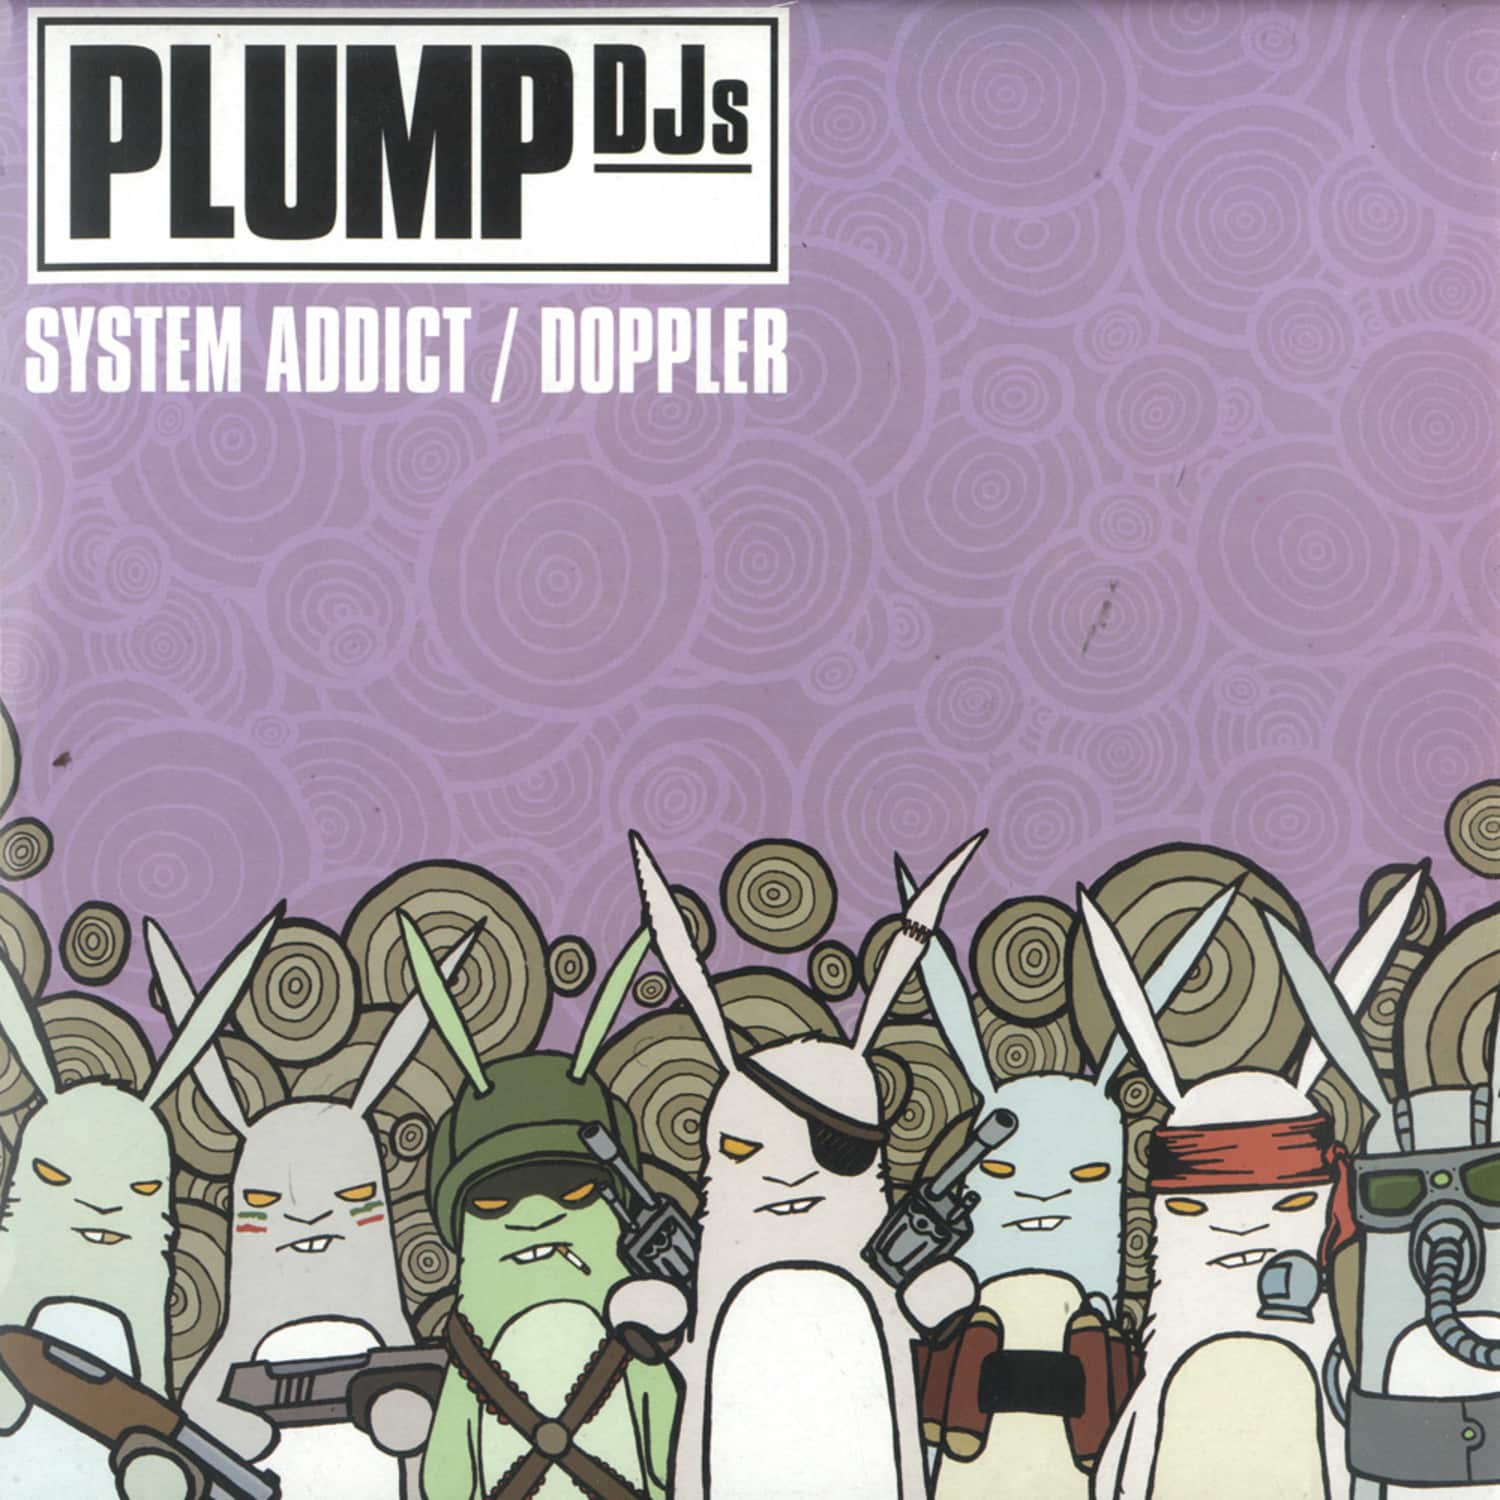 Plump DJs - SYSTEM ADDICT / DOPPLER